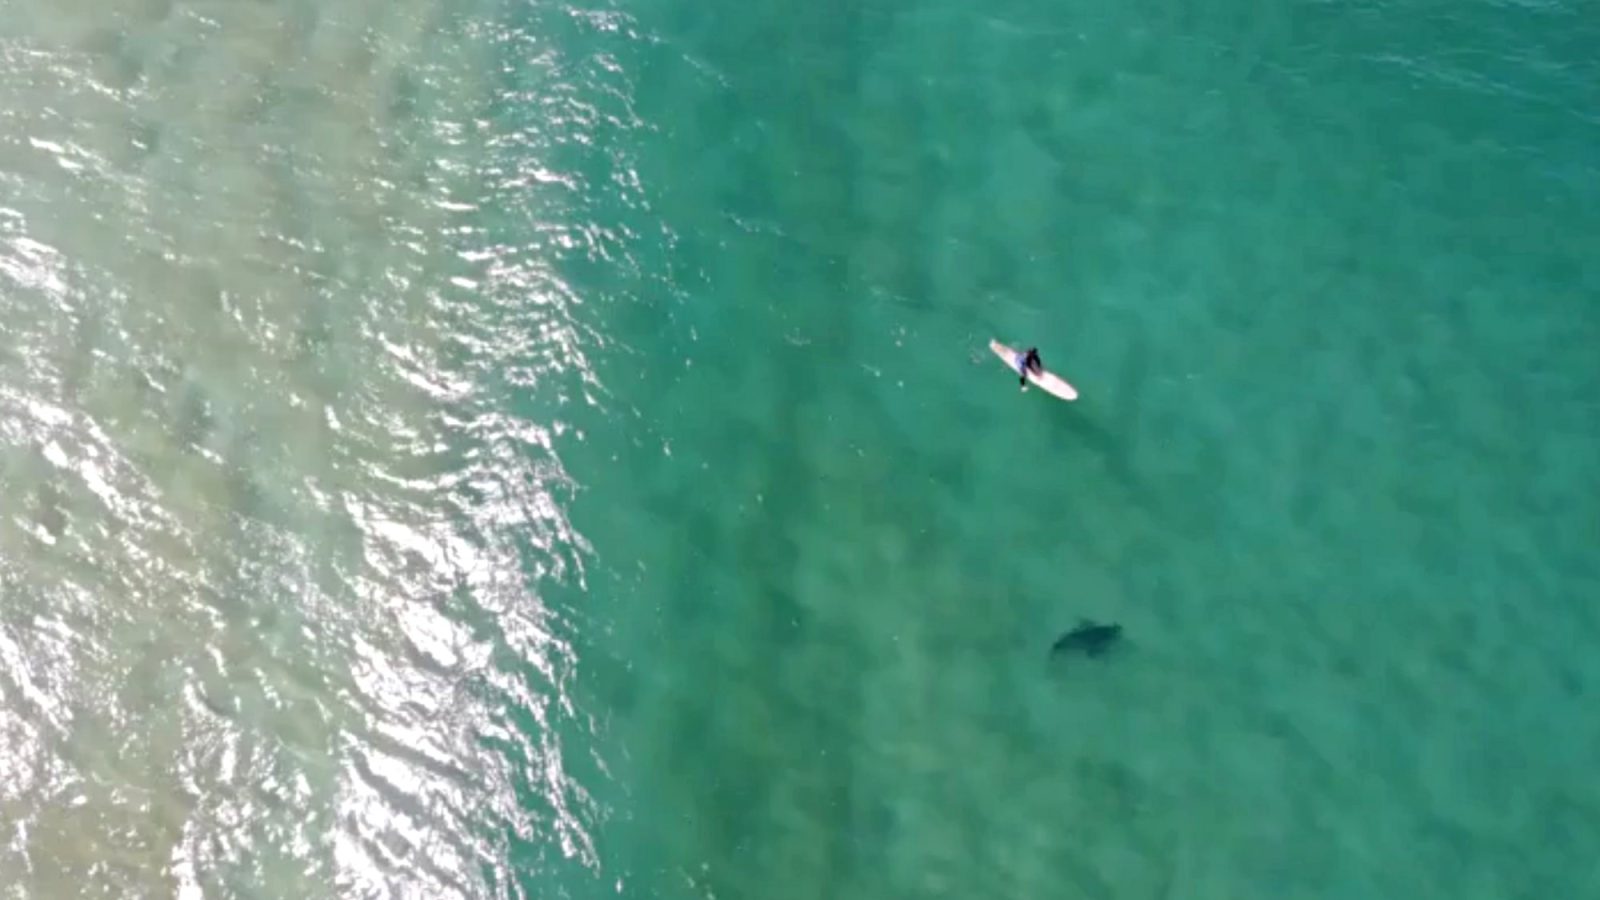 Drone pilot uses Mavic 2 Enterprise to warn surfer of approaching shark